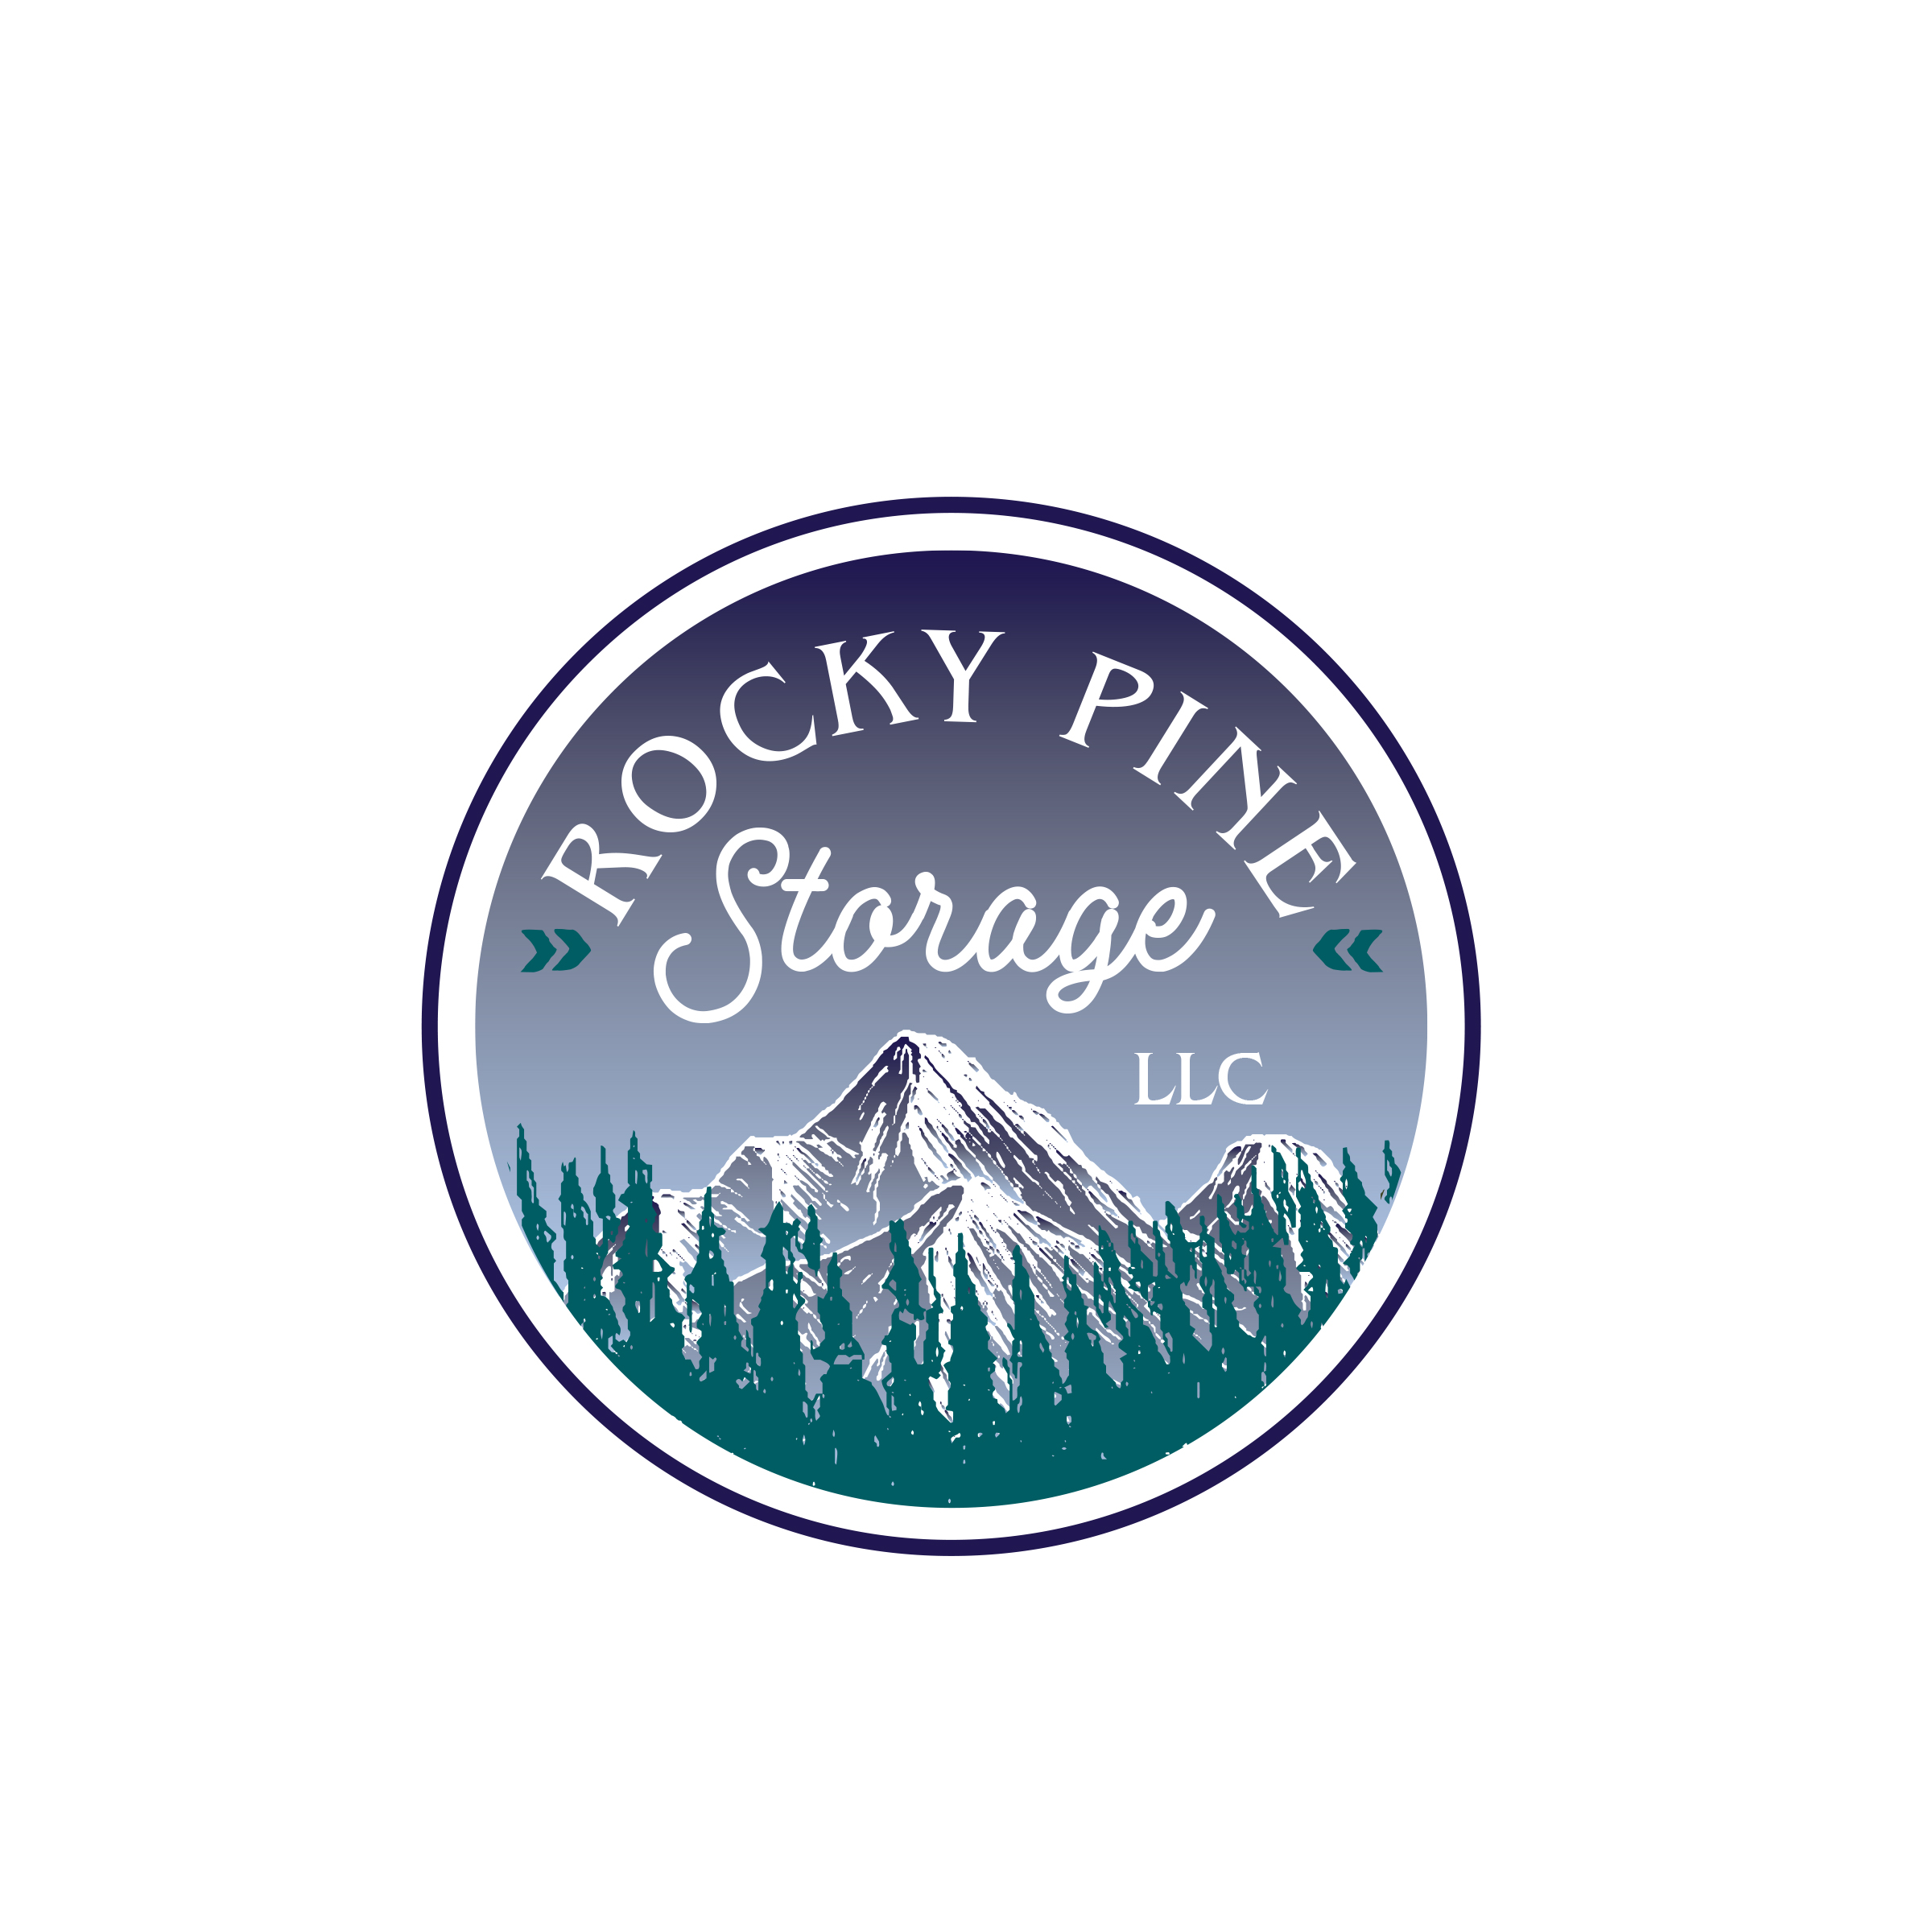 Rocky Pine Storage Comp 1